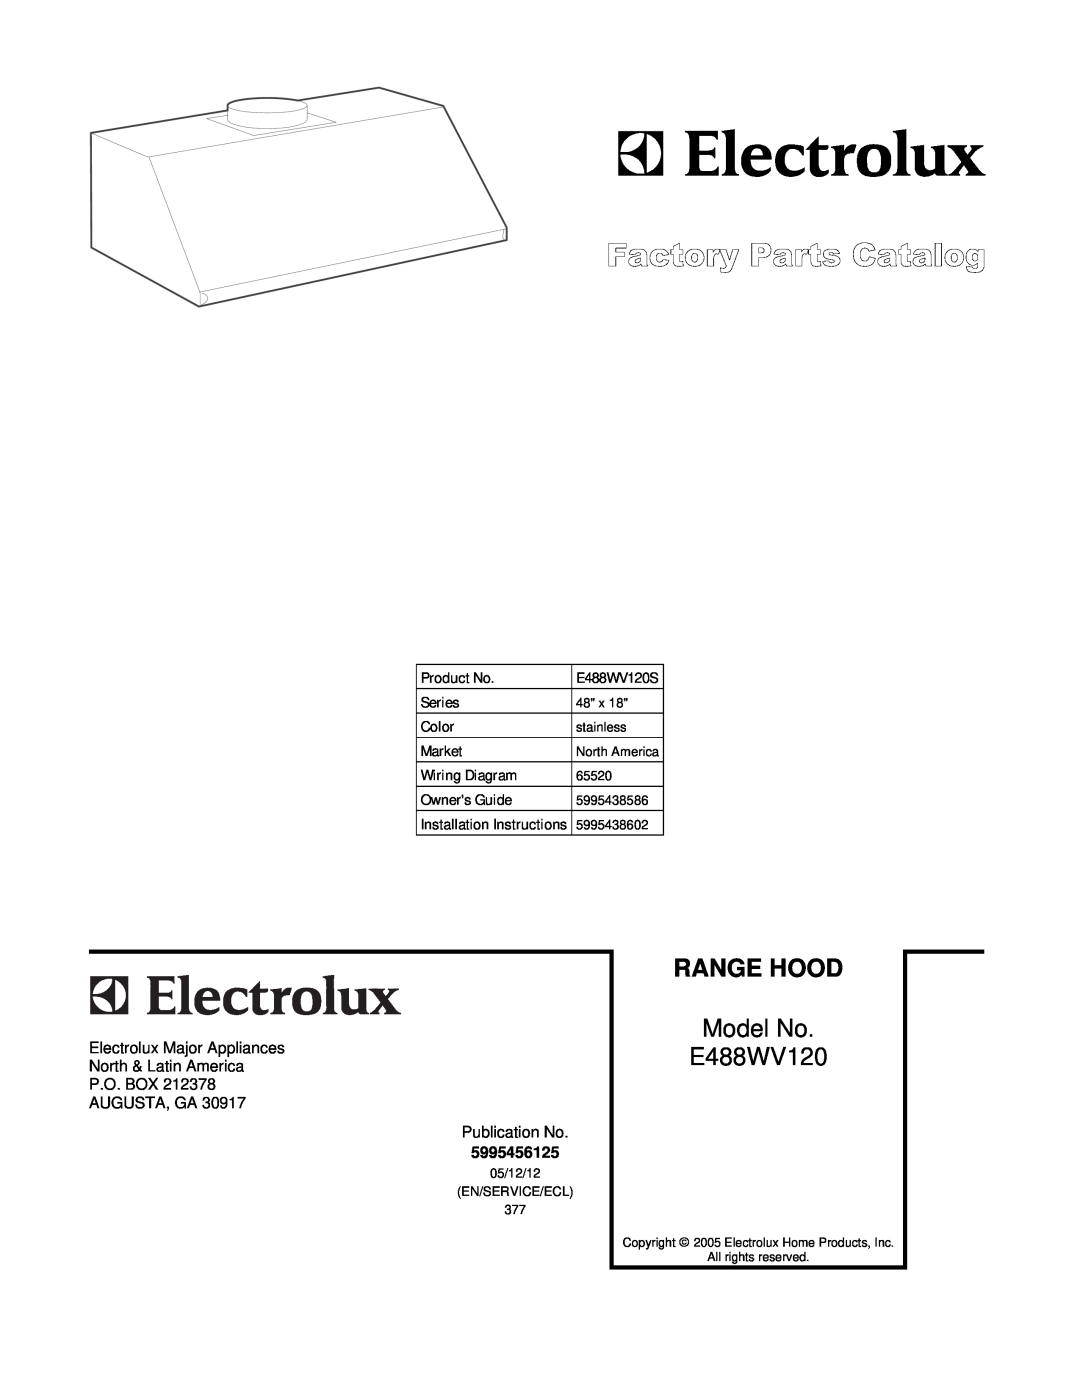 Electrolux E488WV120 installation instructions Range Hood, Model No 